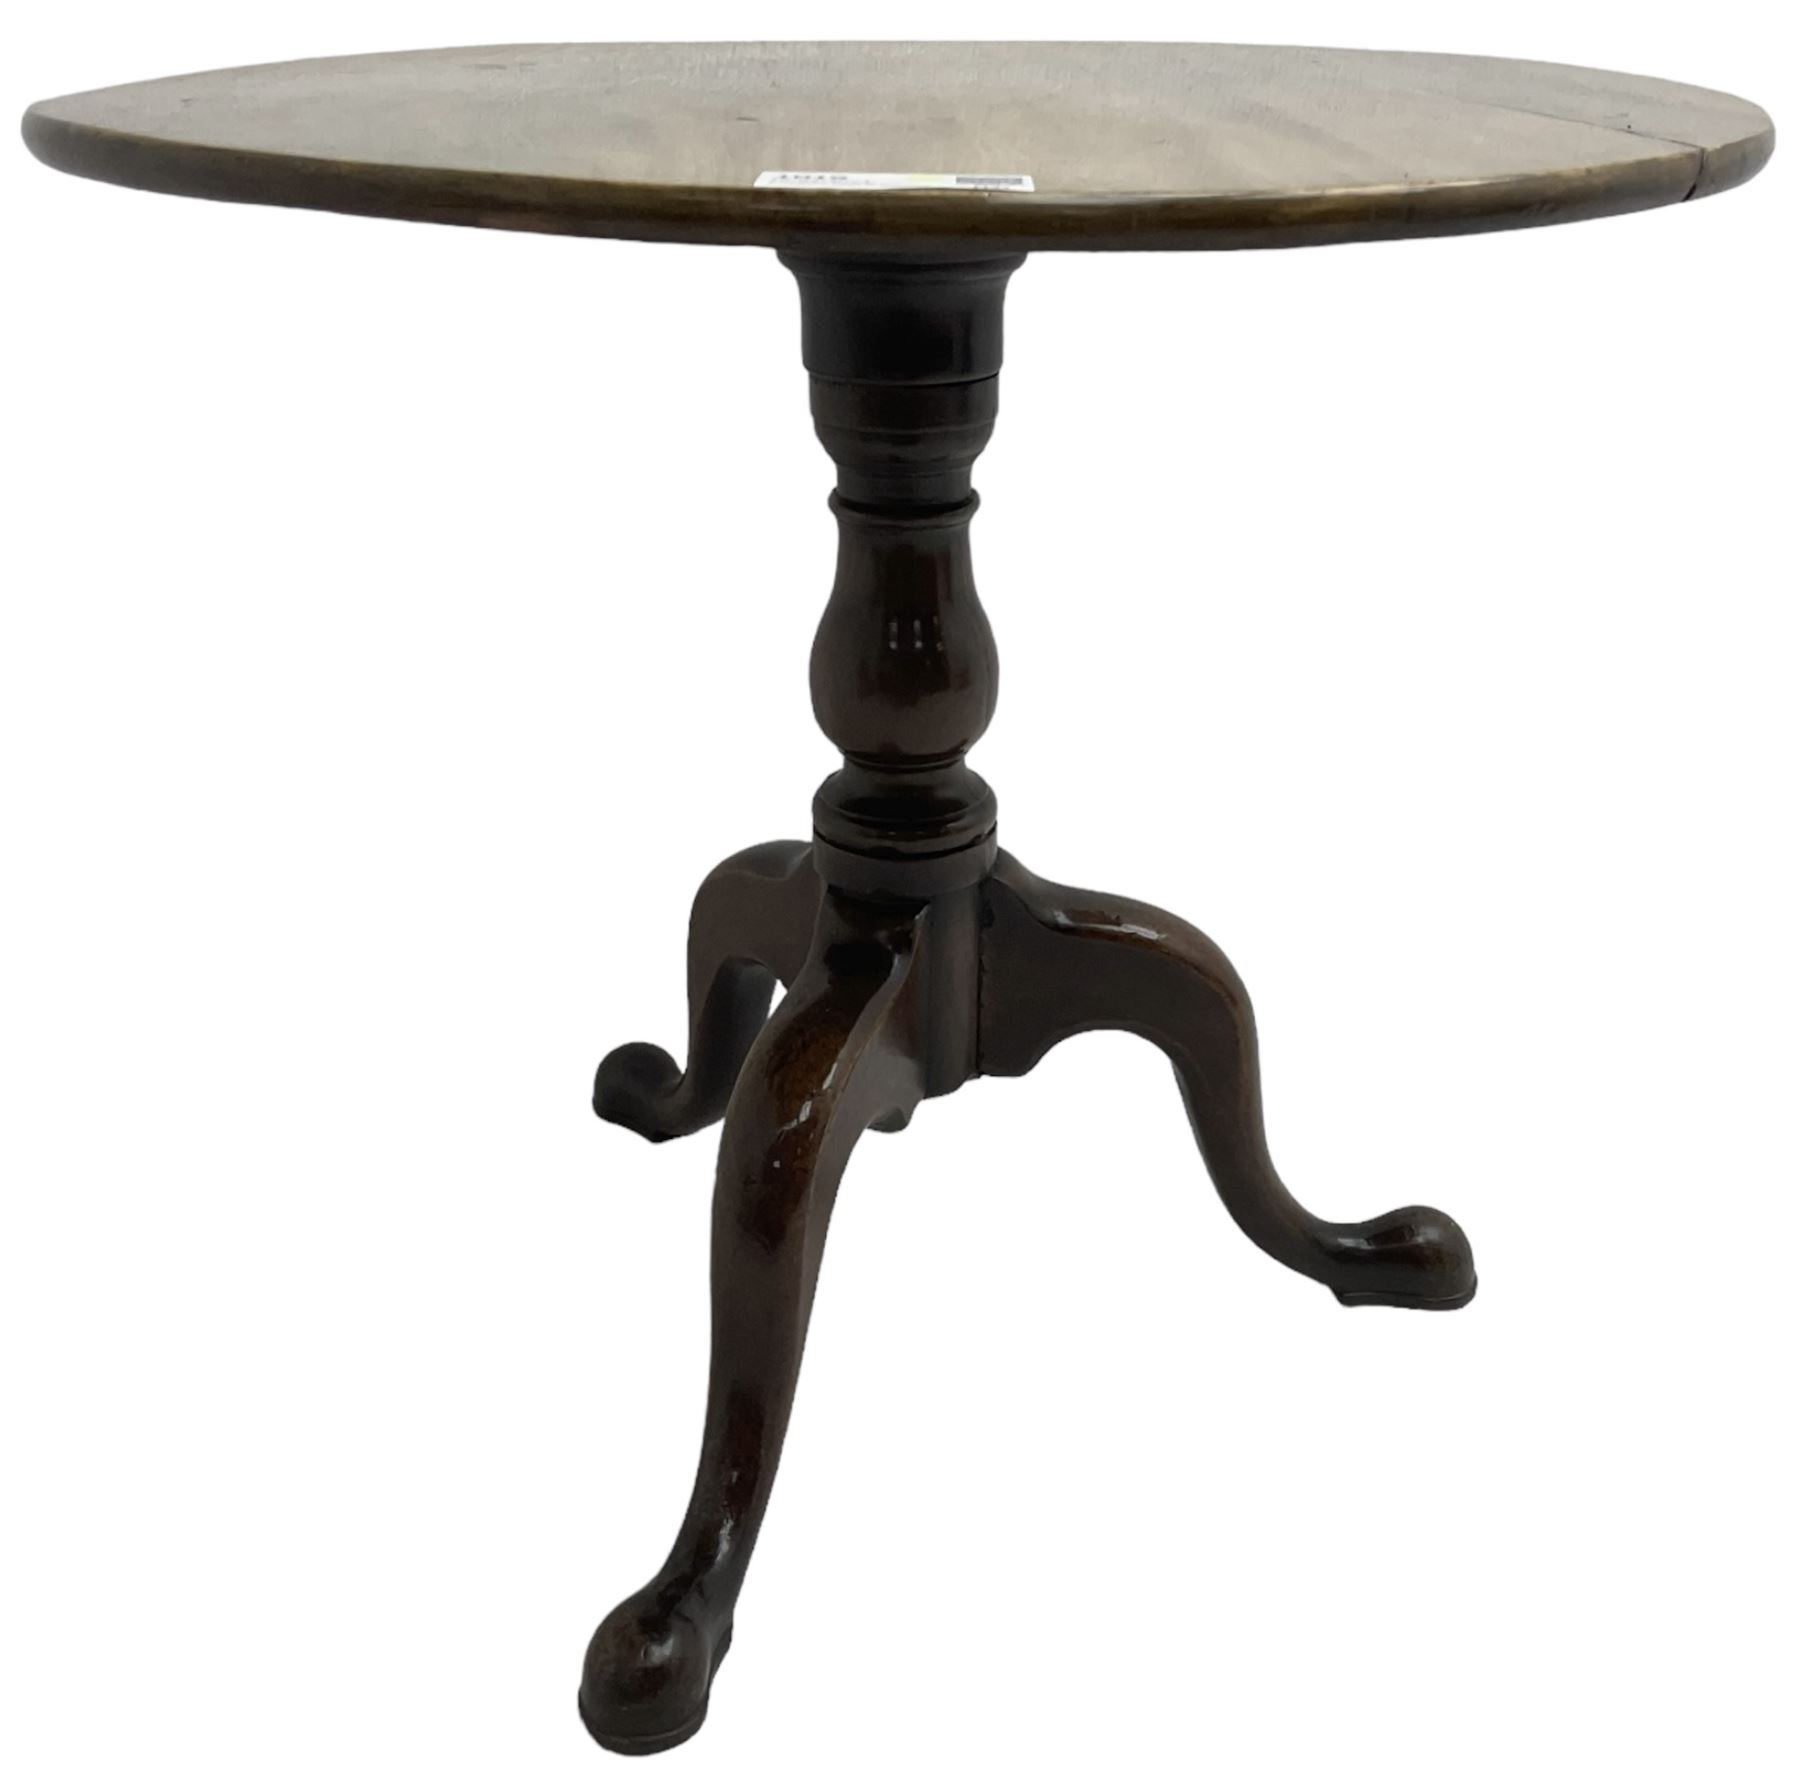 19th century mahogany pedestal table - Image 6 of 6